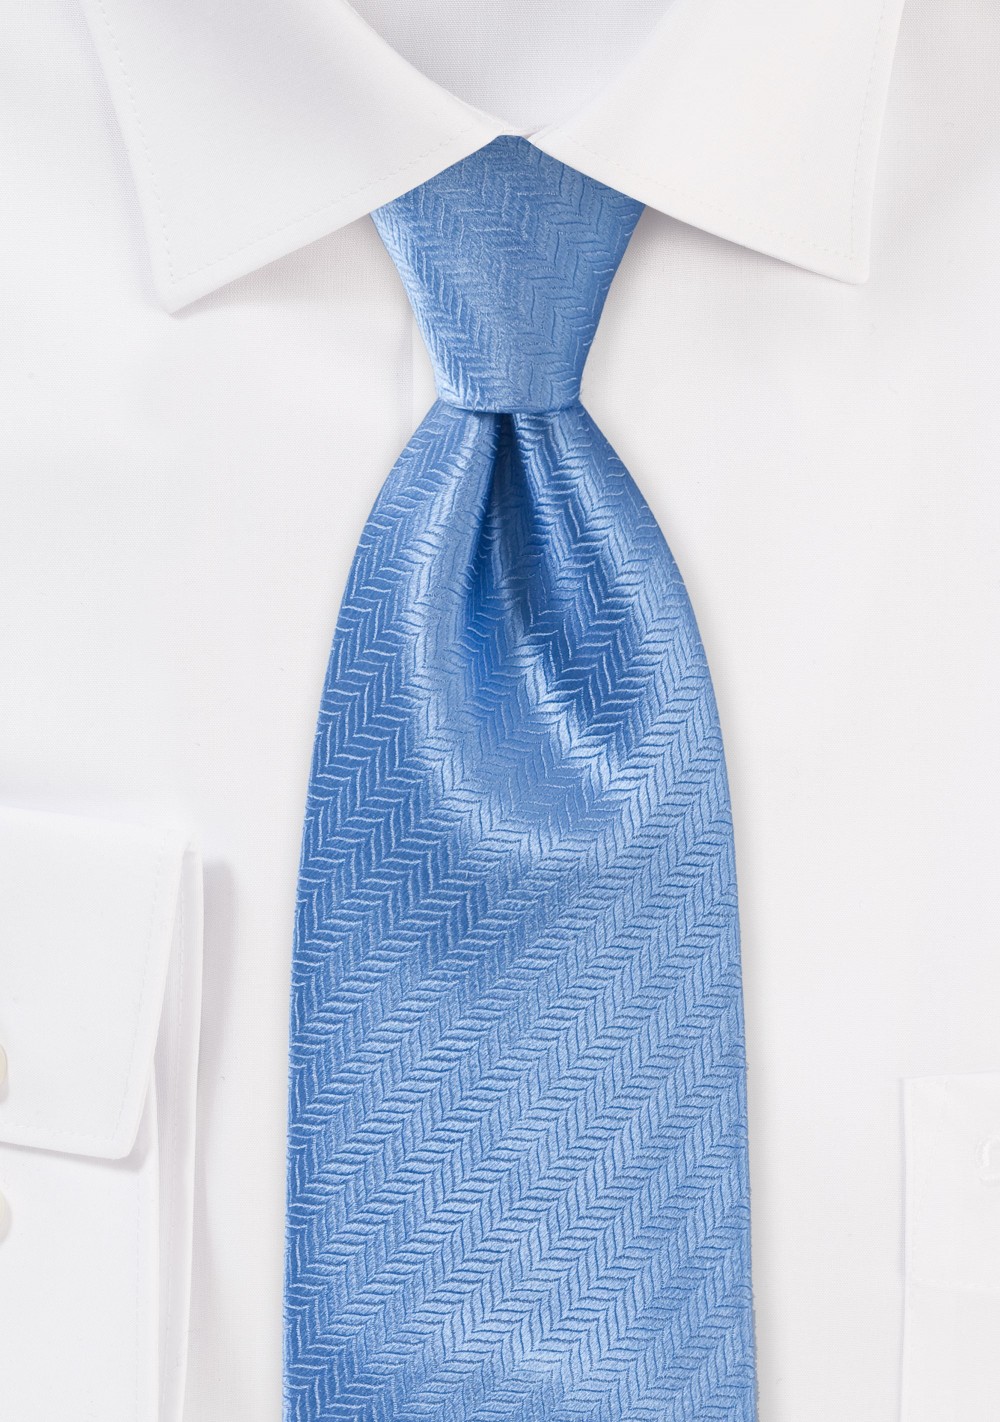 Feather Patterned Tie In Cornflower Blue